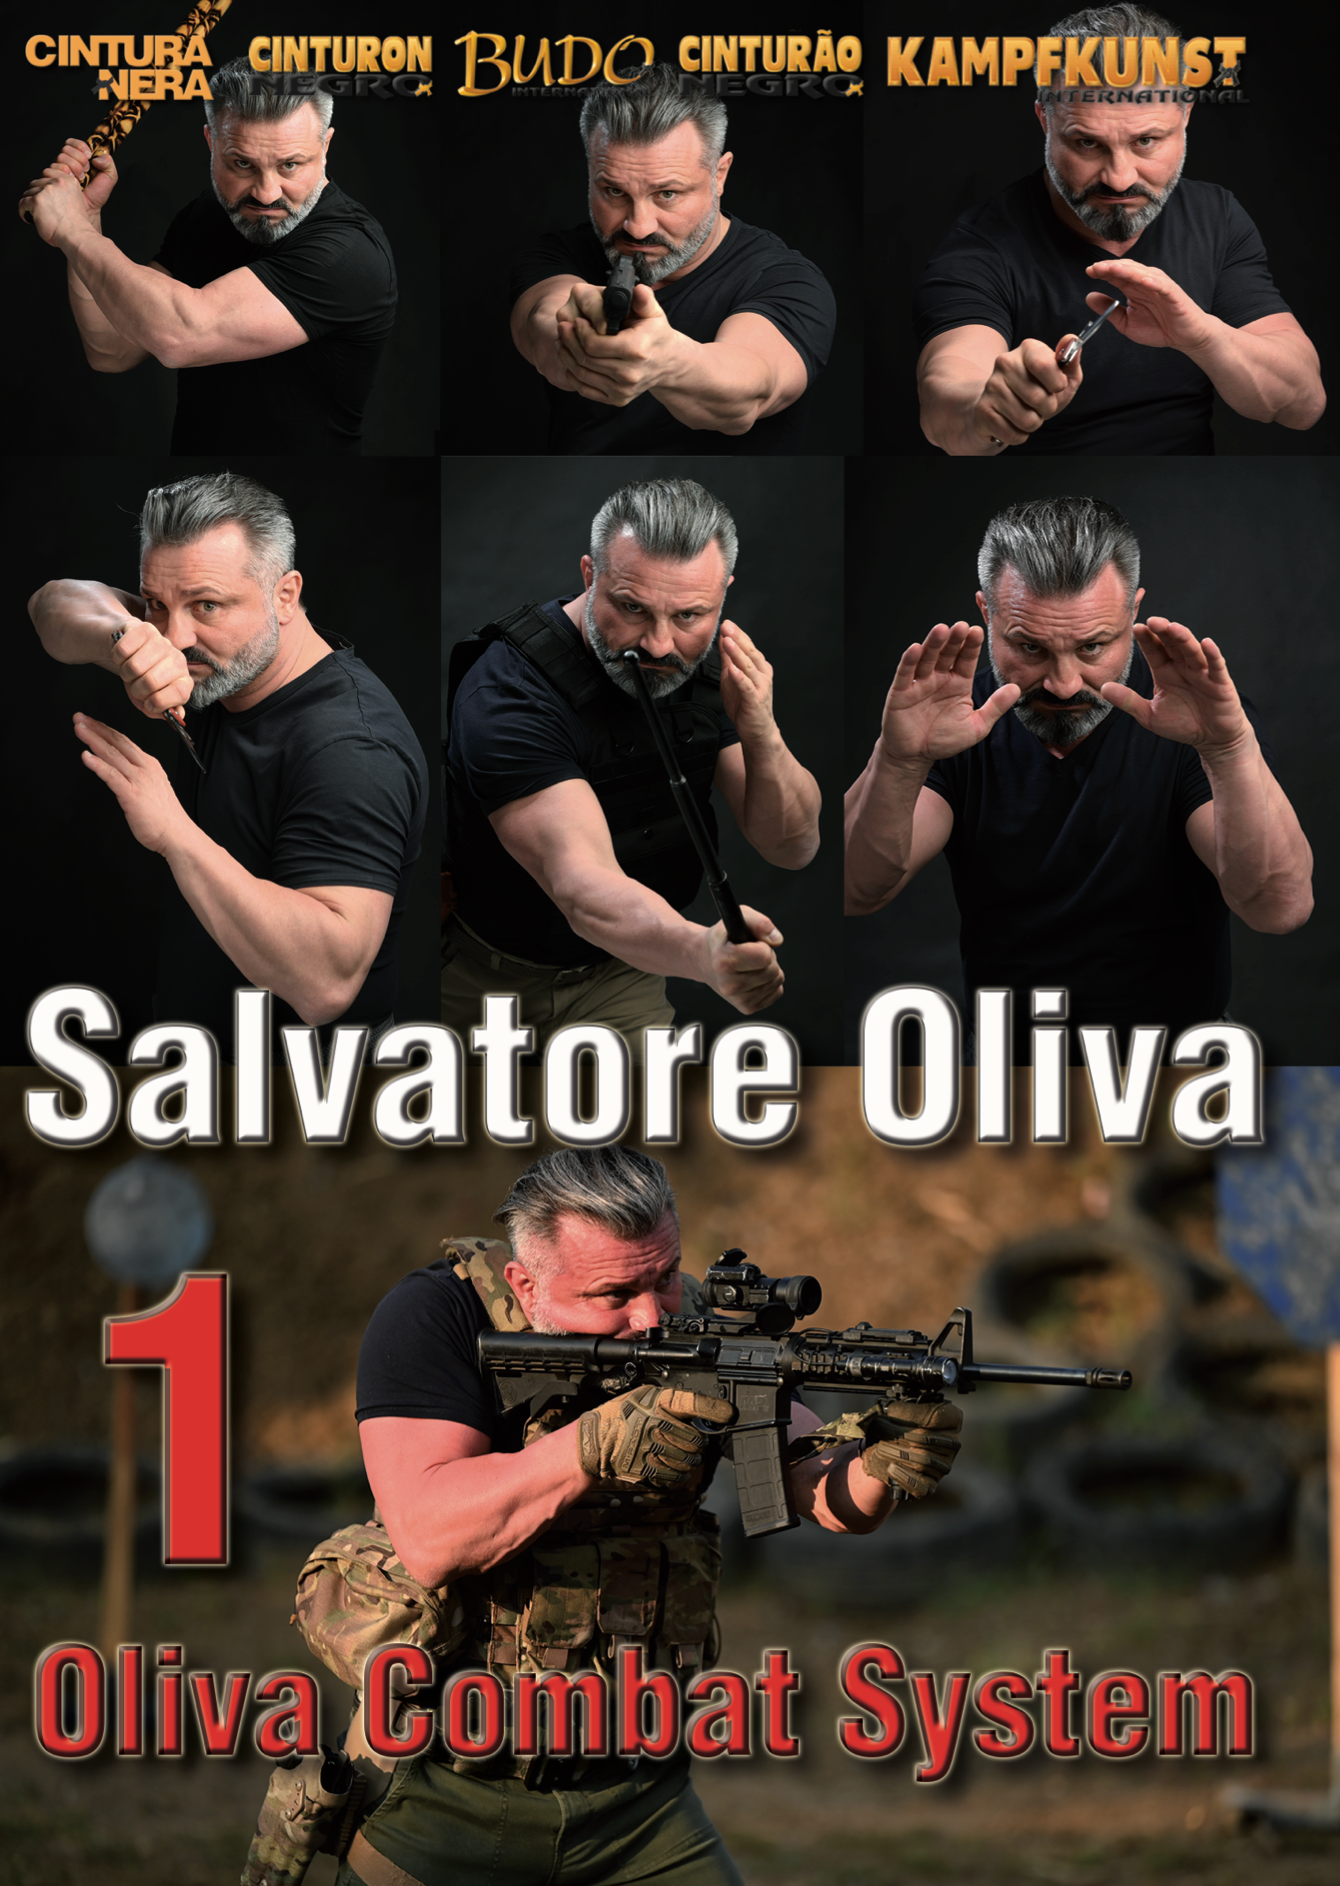 Oliva Combat System Serie 1 DVD de Salvatore Oliva